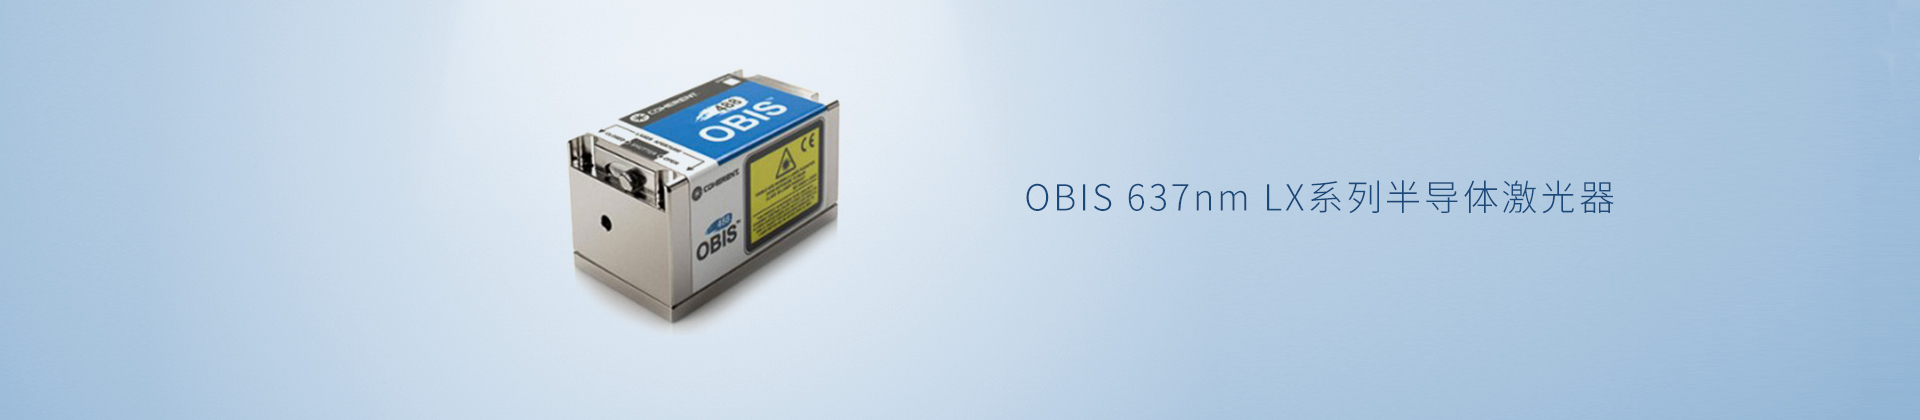 OBIS 637nm LX系列半导体激光器